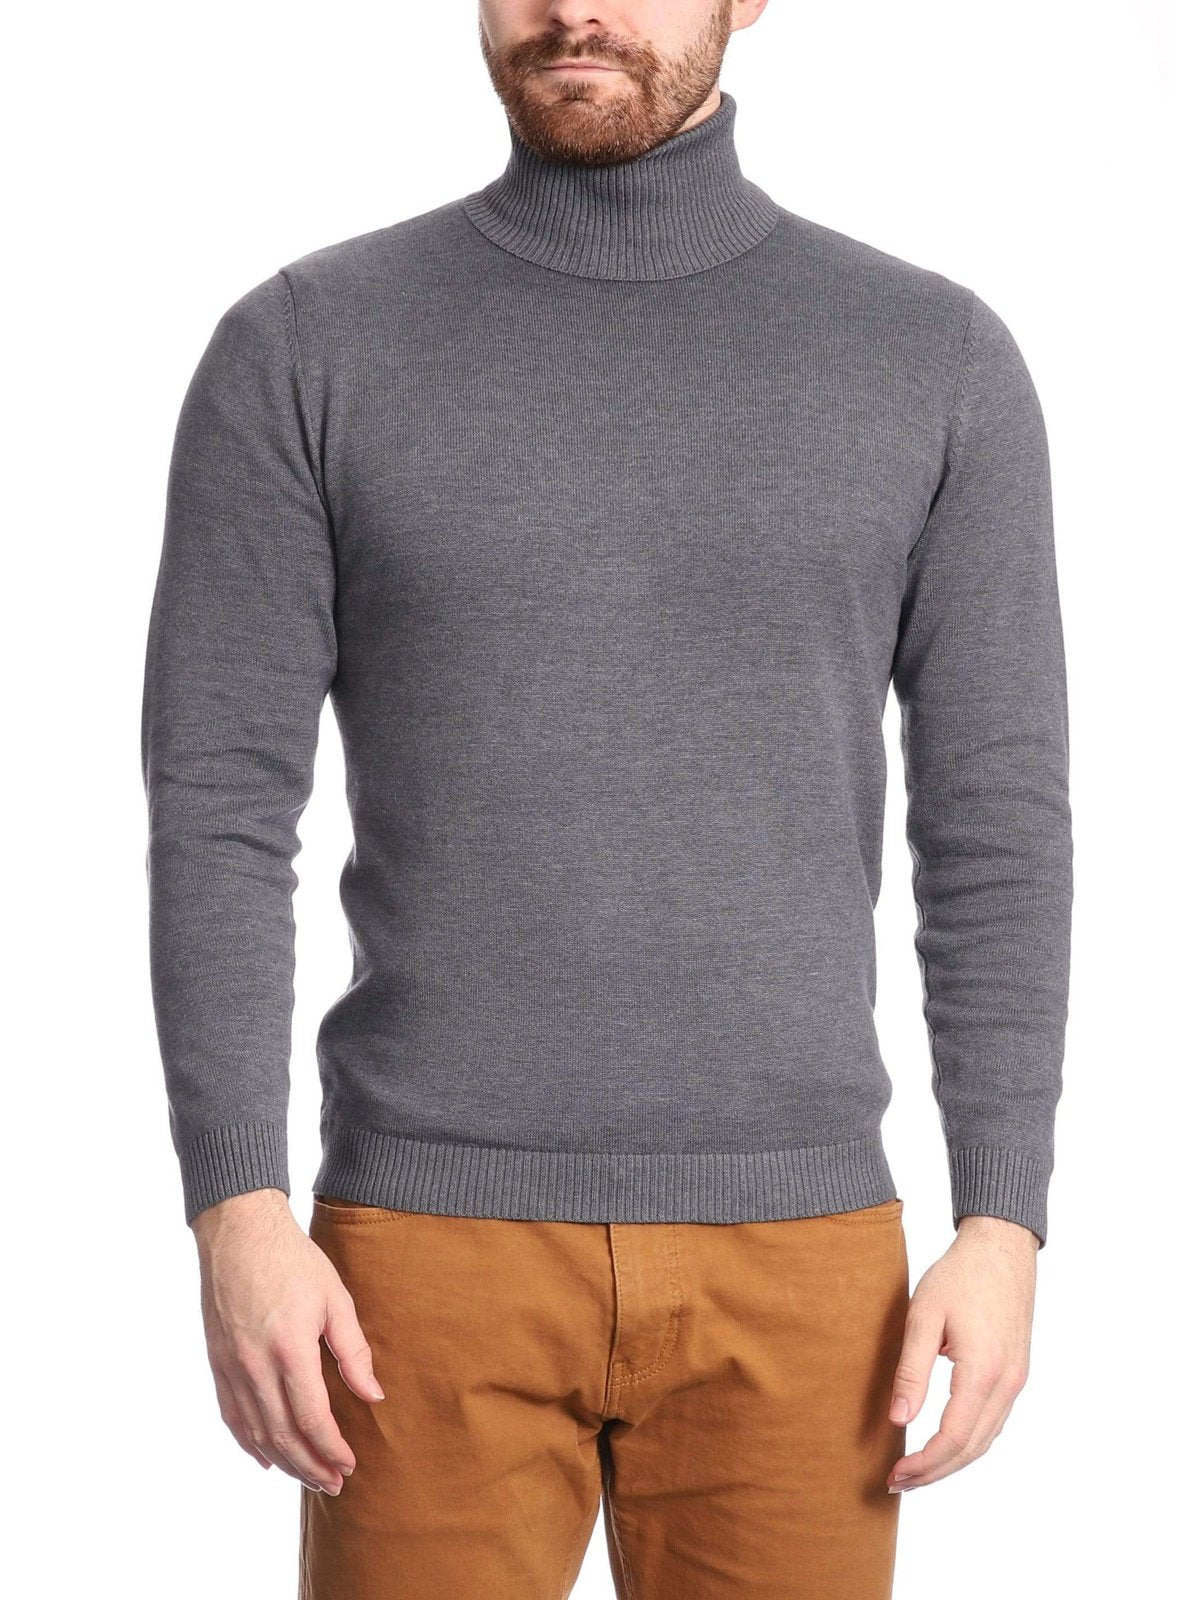 Arthur Black Default Category Migrated Gray / XL Arthur Black Men's Solid Gray Pullover Cotton Blend Turtleneck Sweater Shirt